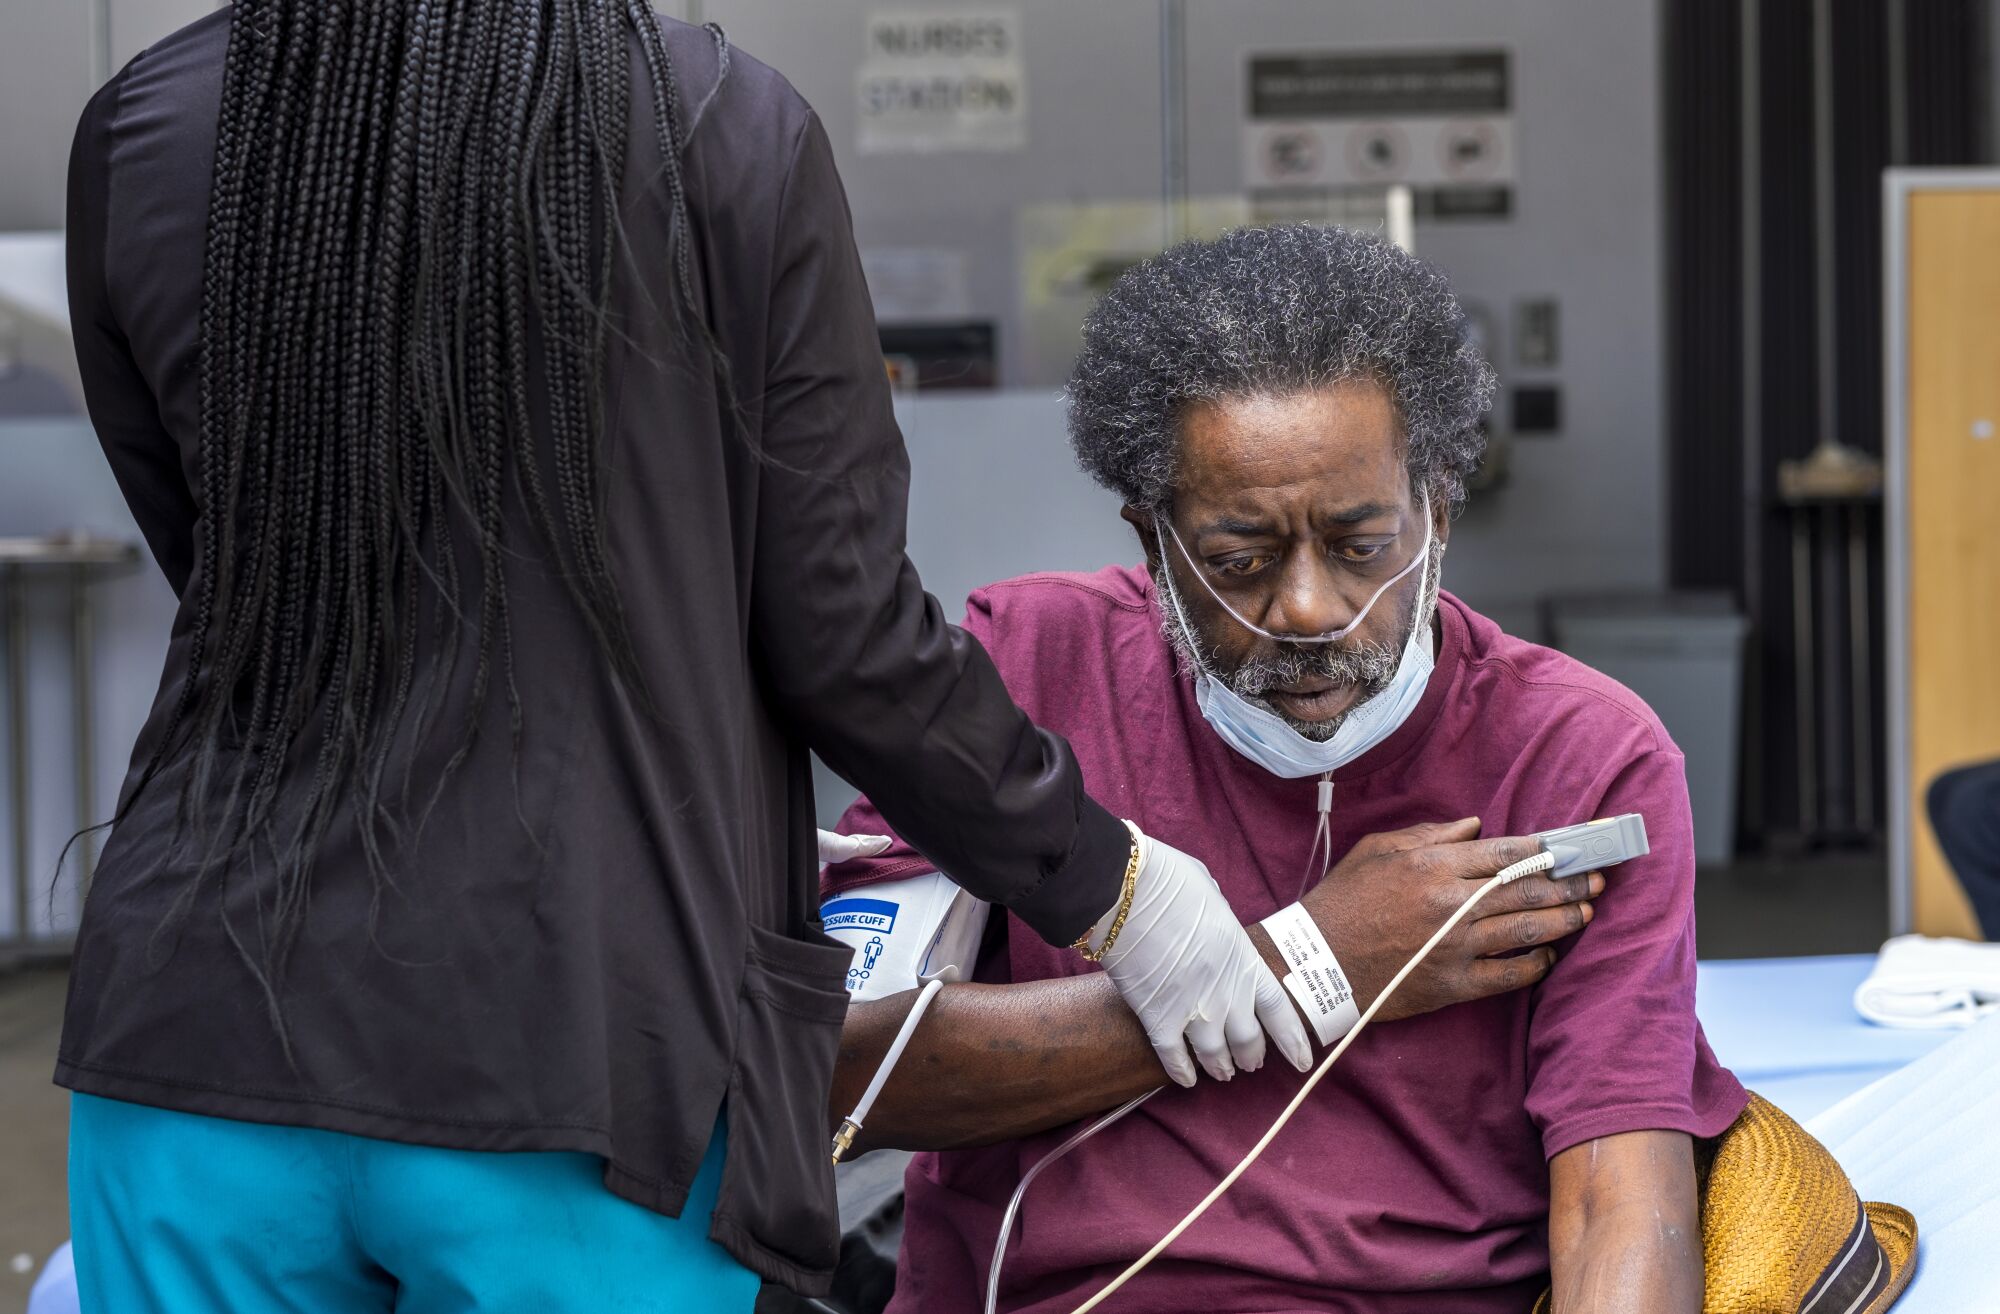 A nurse checks the blood pressure of a patient